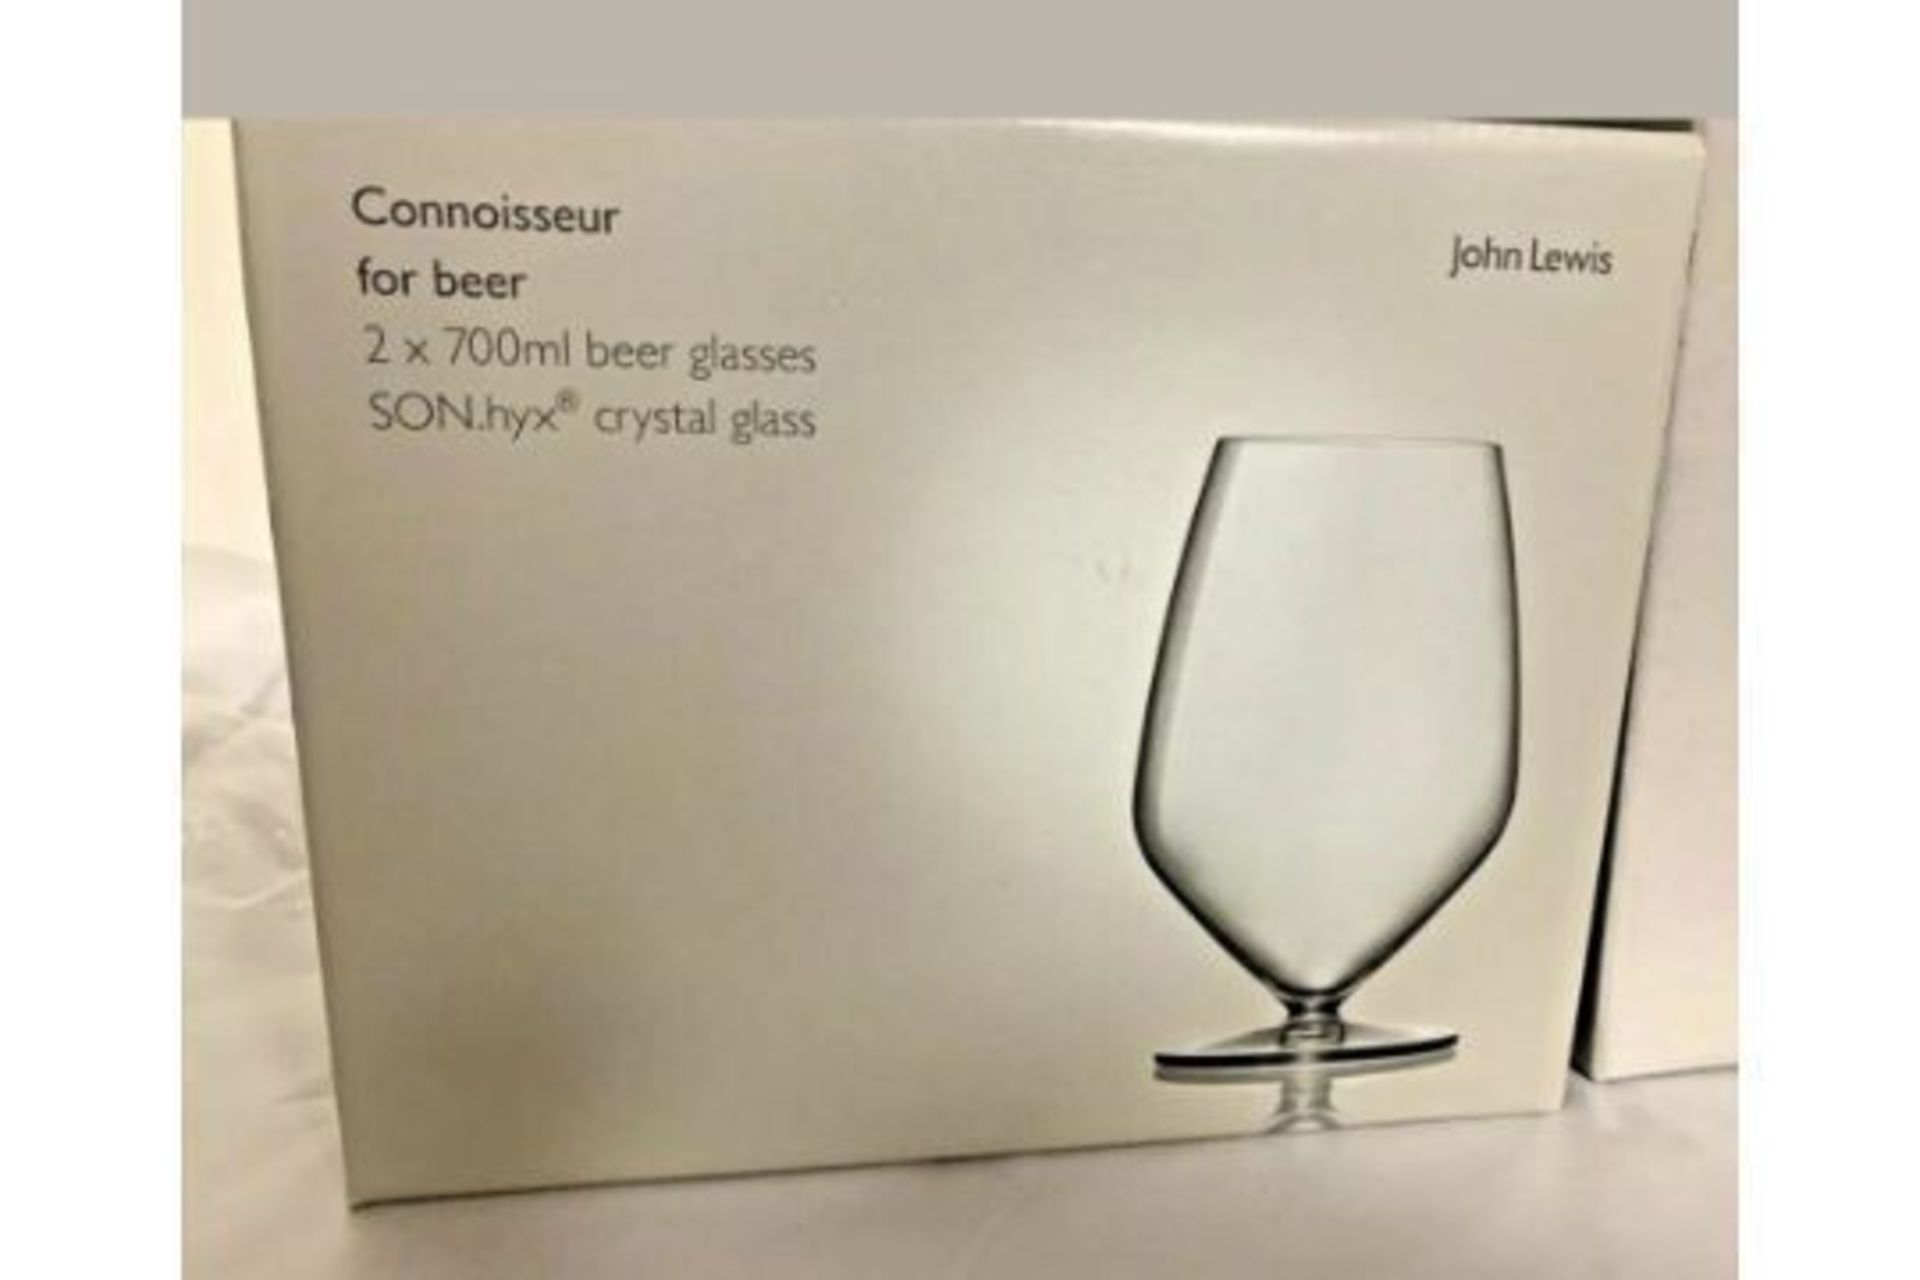 John Lewis Connoisseur For Beer, 700ml Beer Glasses, Set of 2, Crystal Glass - RRP £19.99. - Image 2 of 2